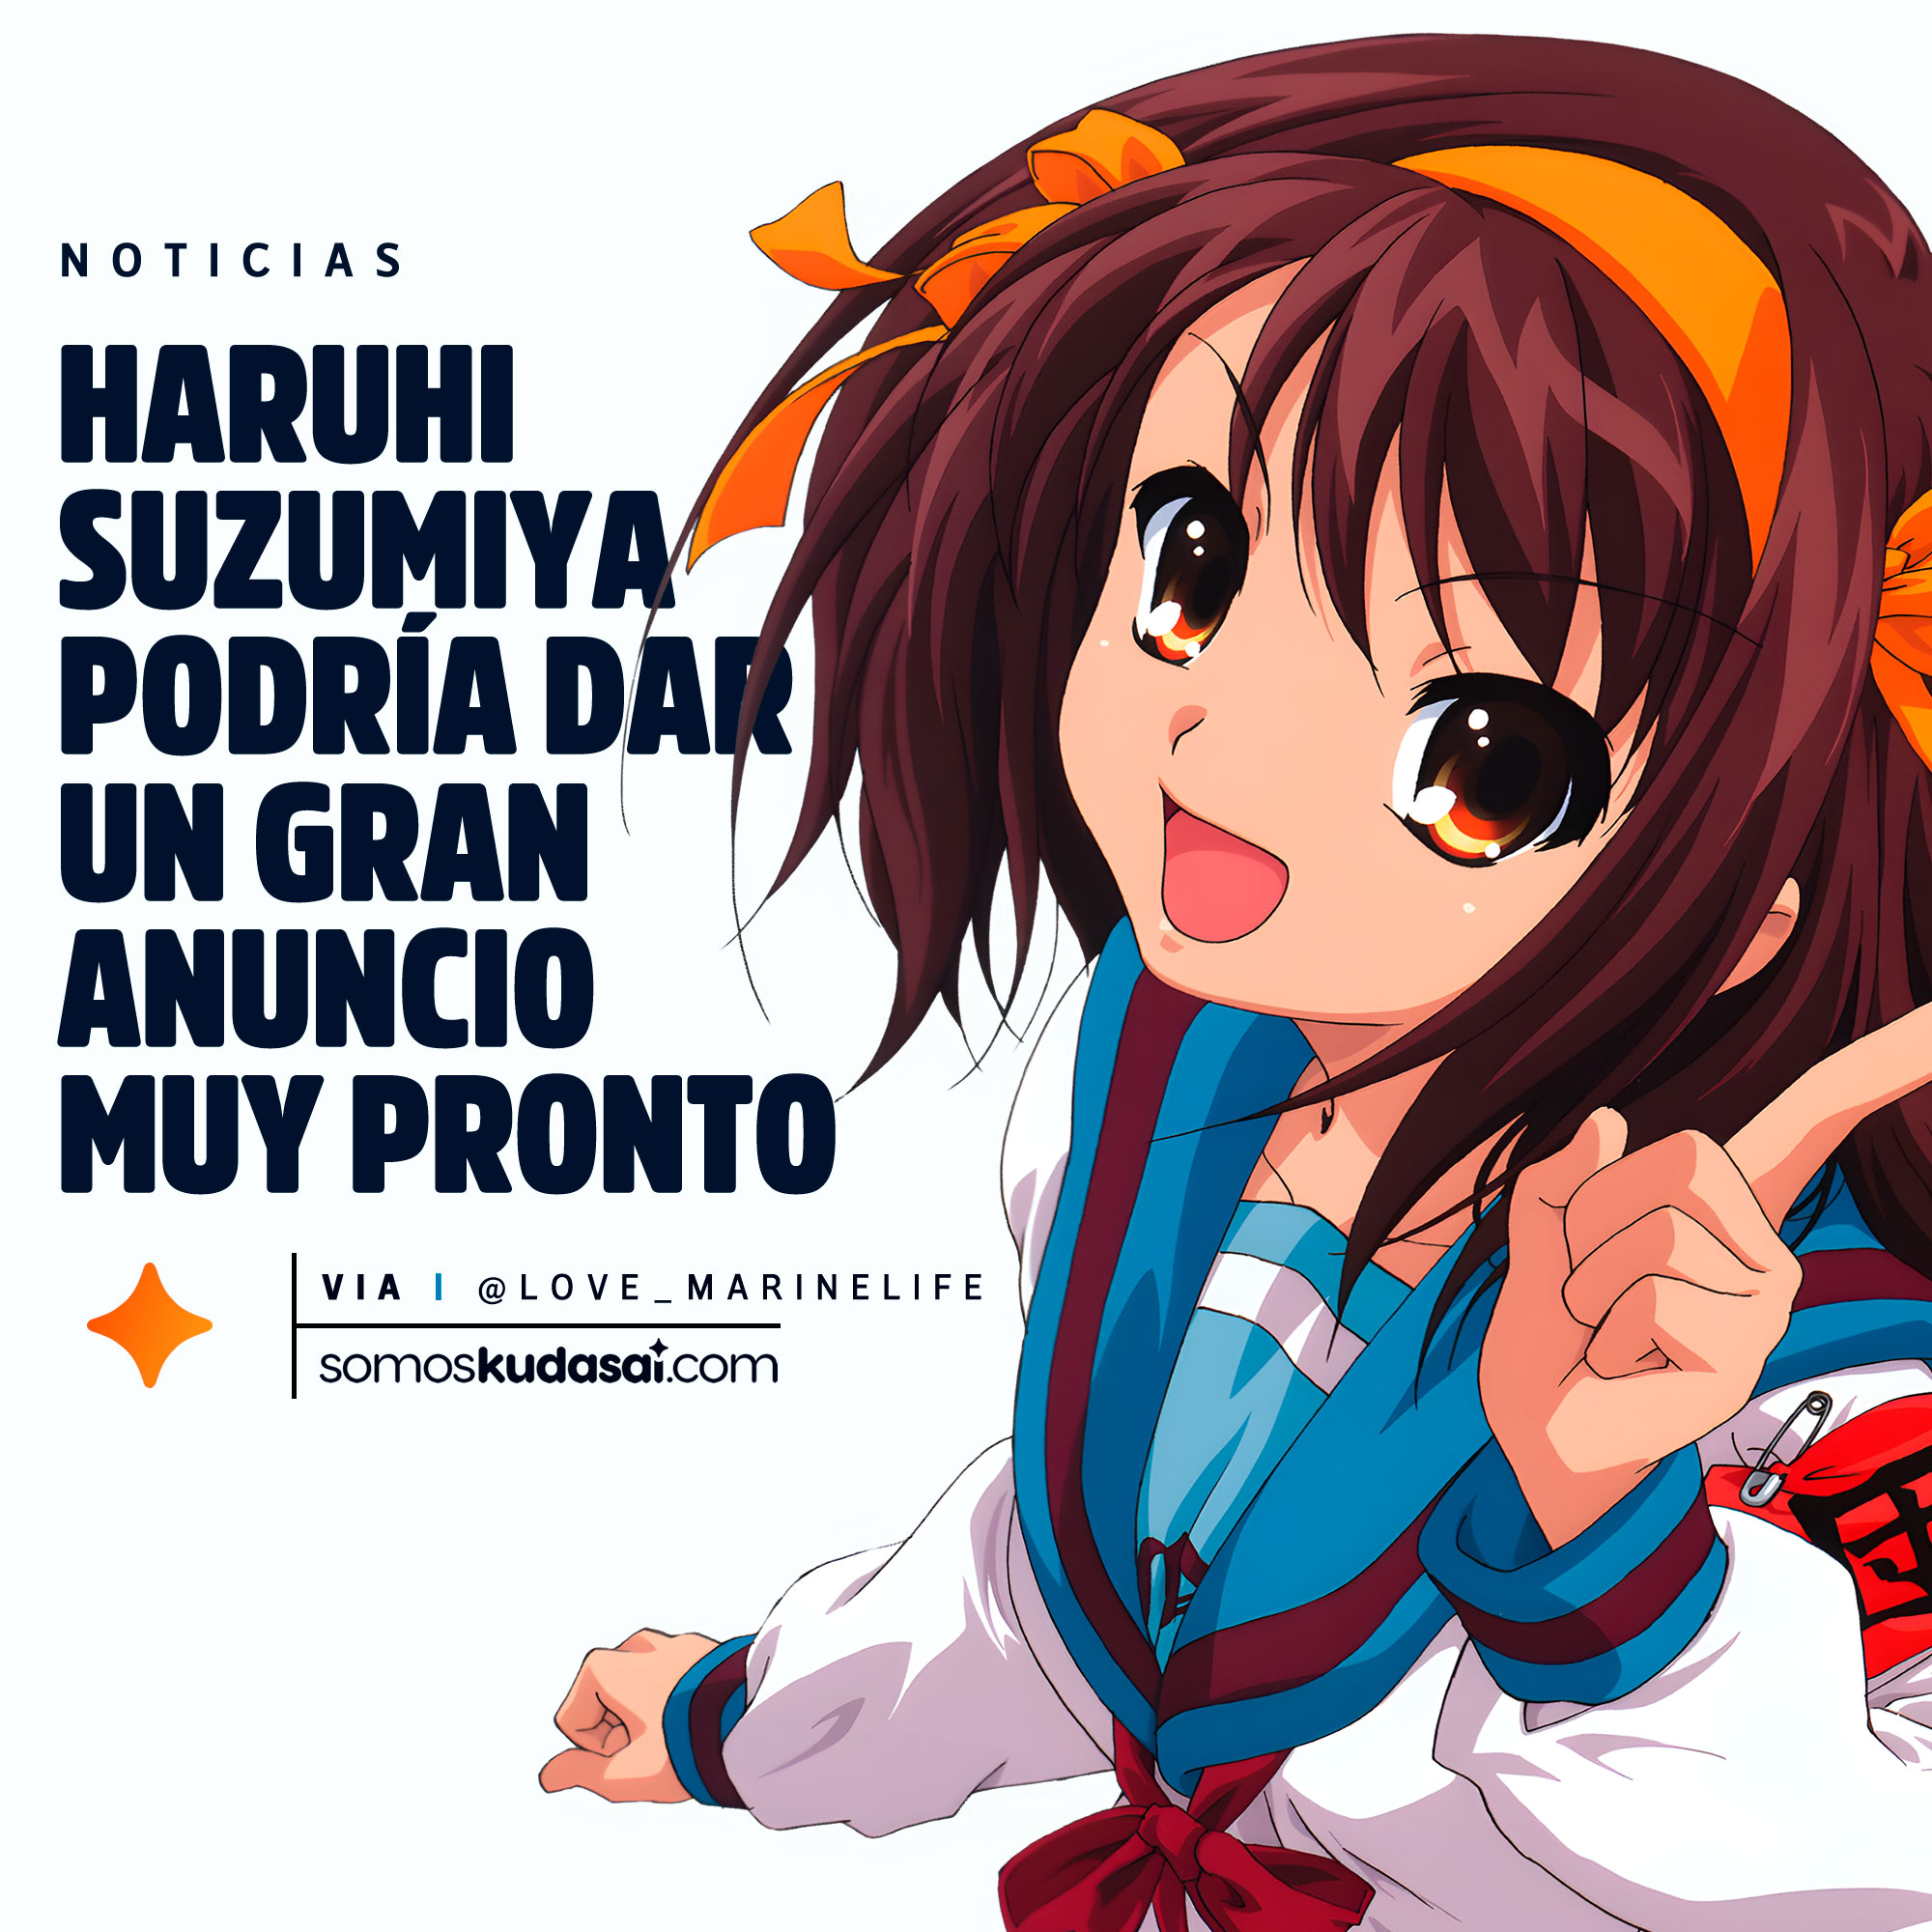 Shuumatsu no harem, capítulo 4 online sub español: fecha y hora de estreno  del anime, Crunchyroll, Manga, México, Japón, Animes